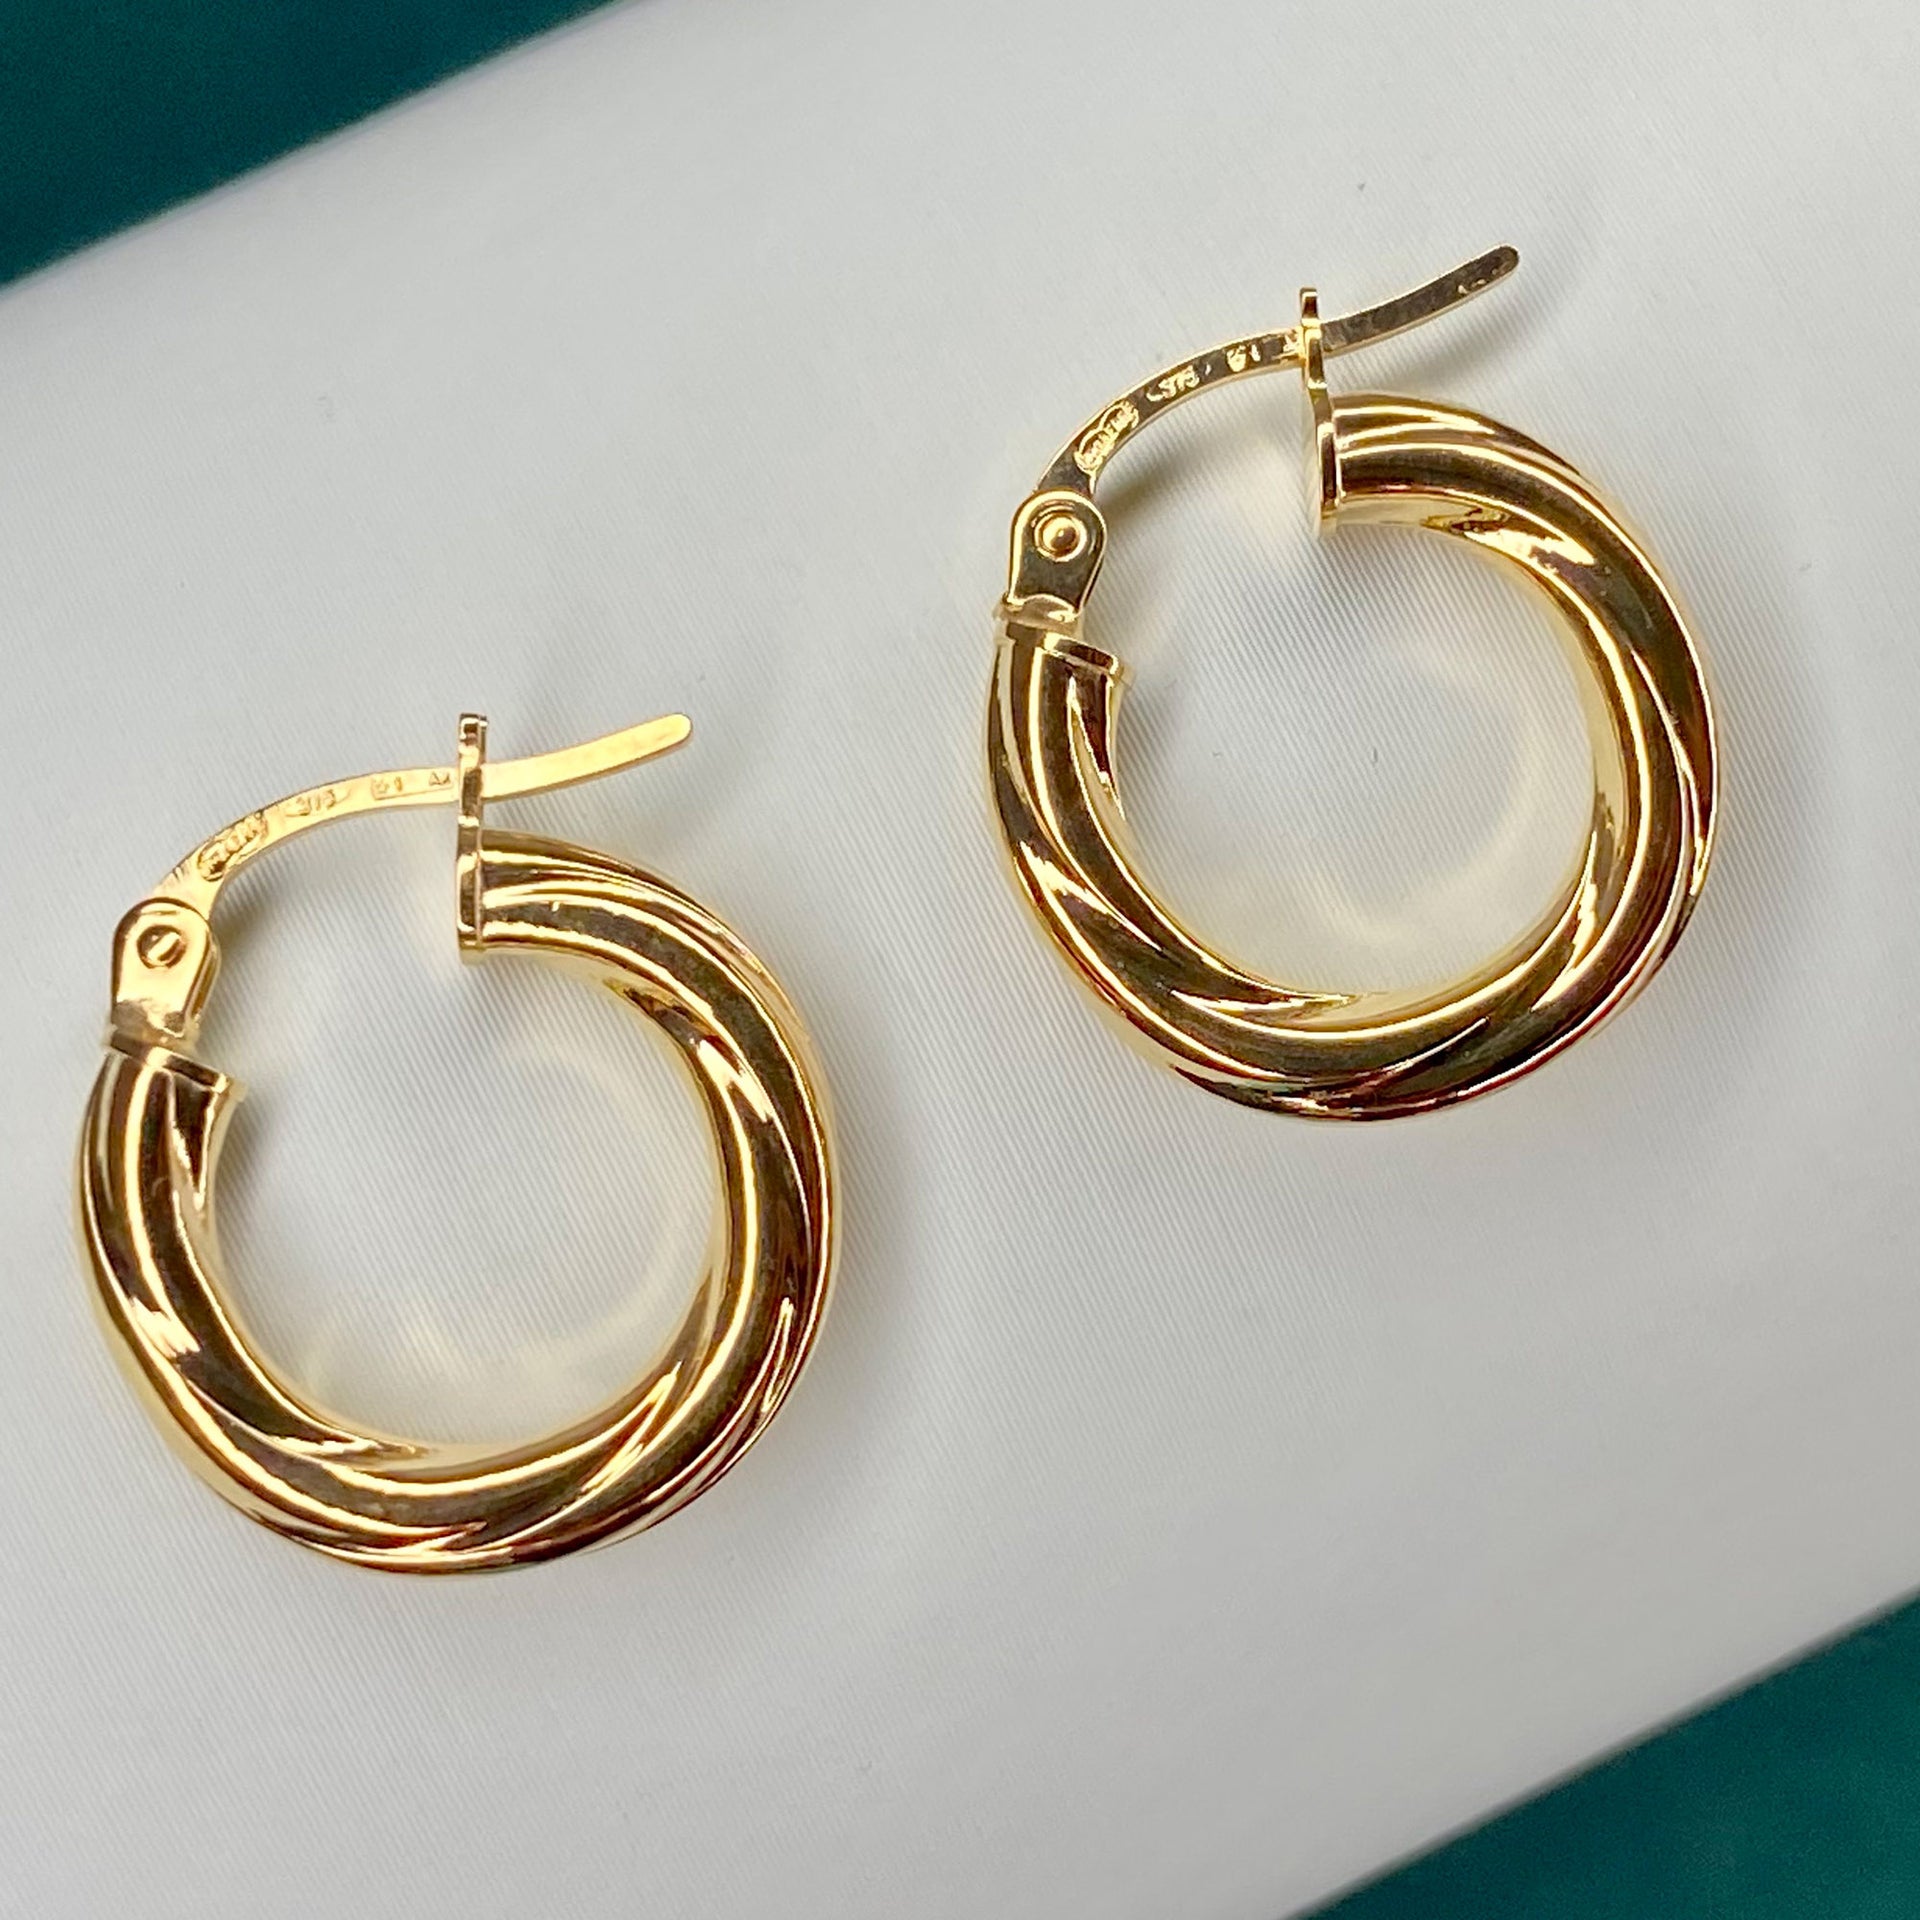 9ct solid Gold Twisted Hoop Earrings 15.6mm